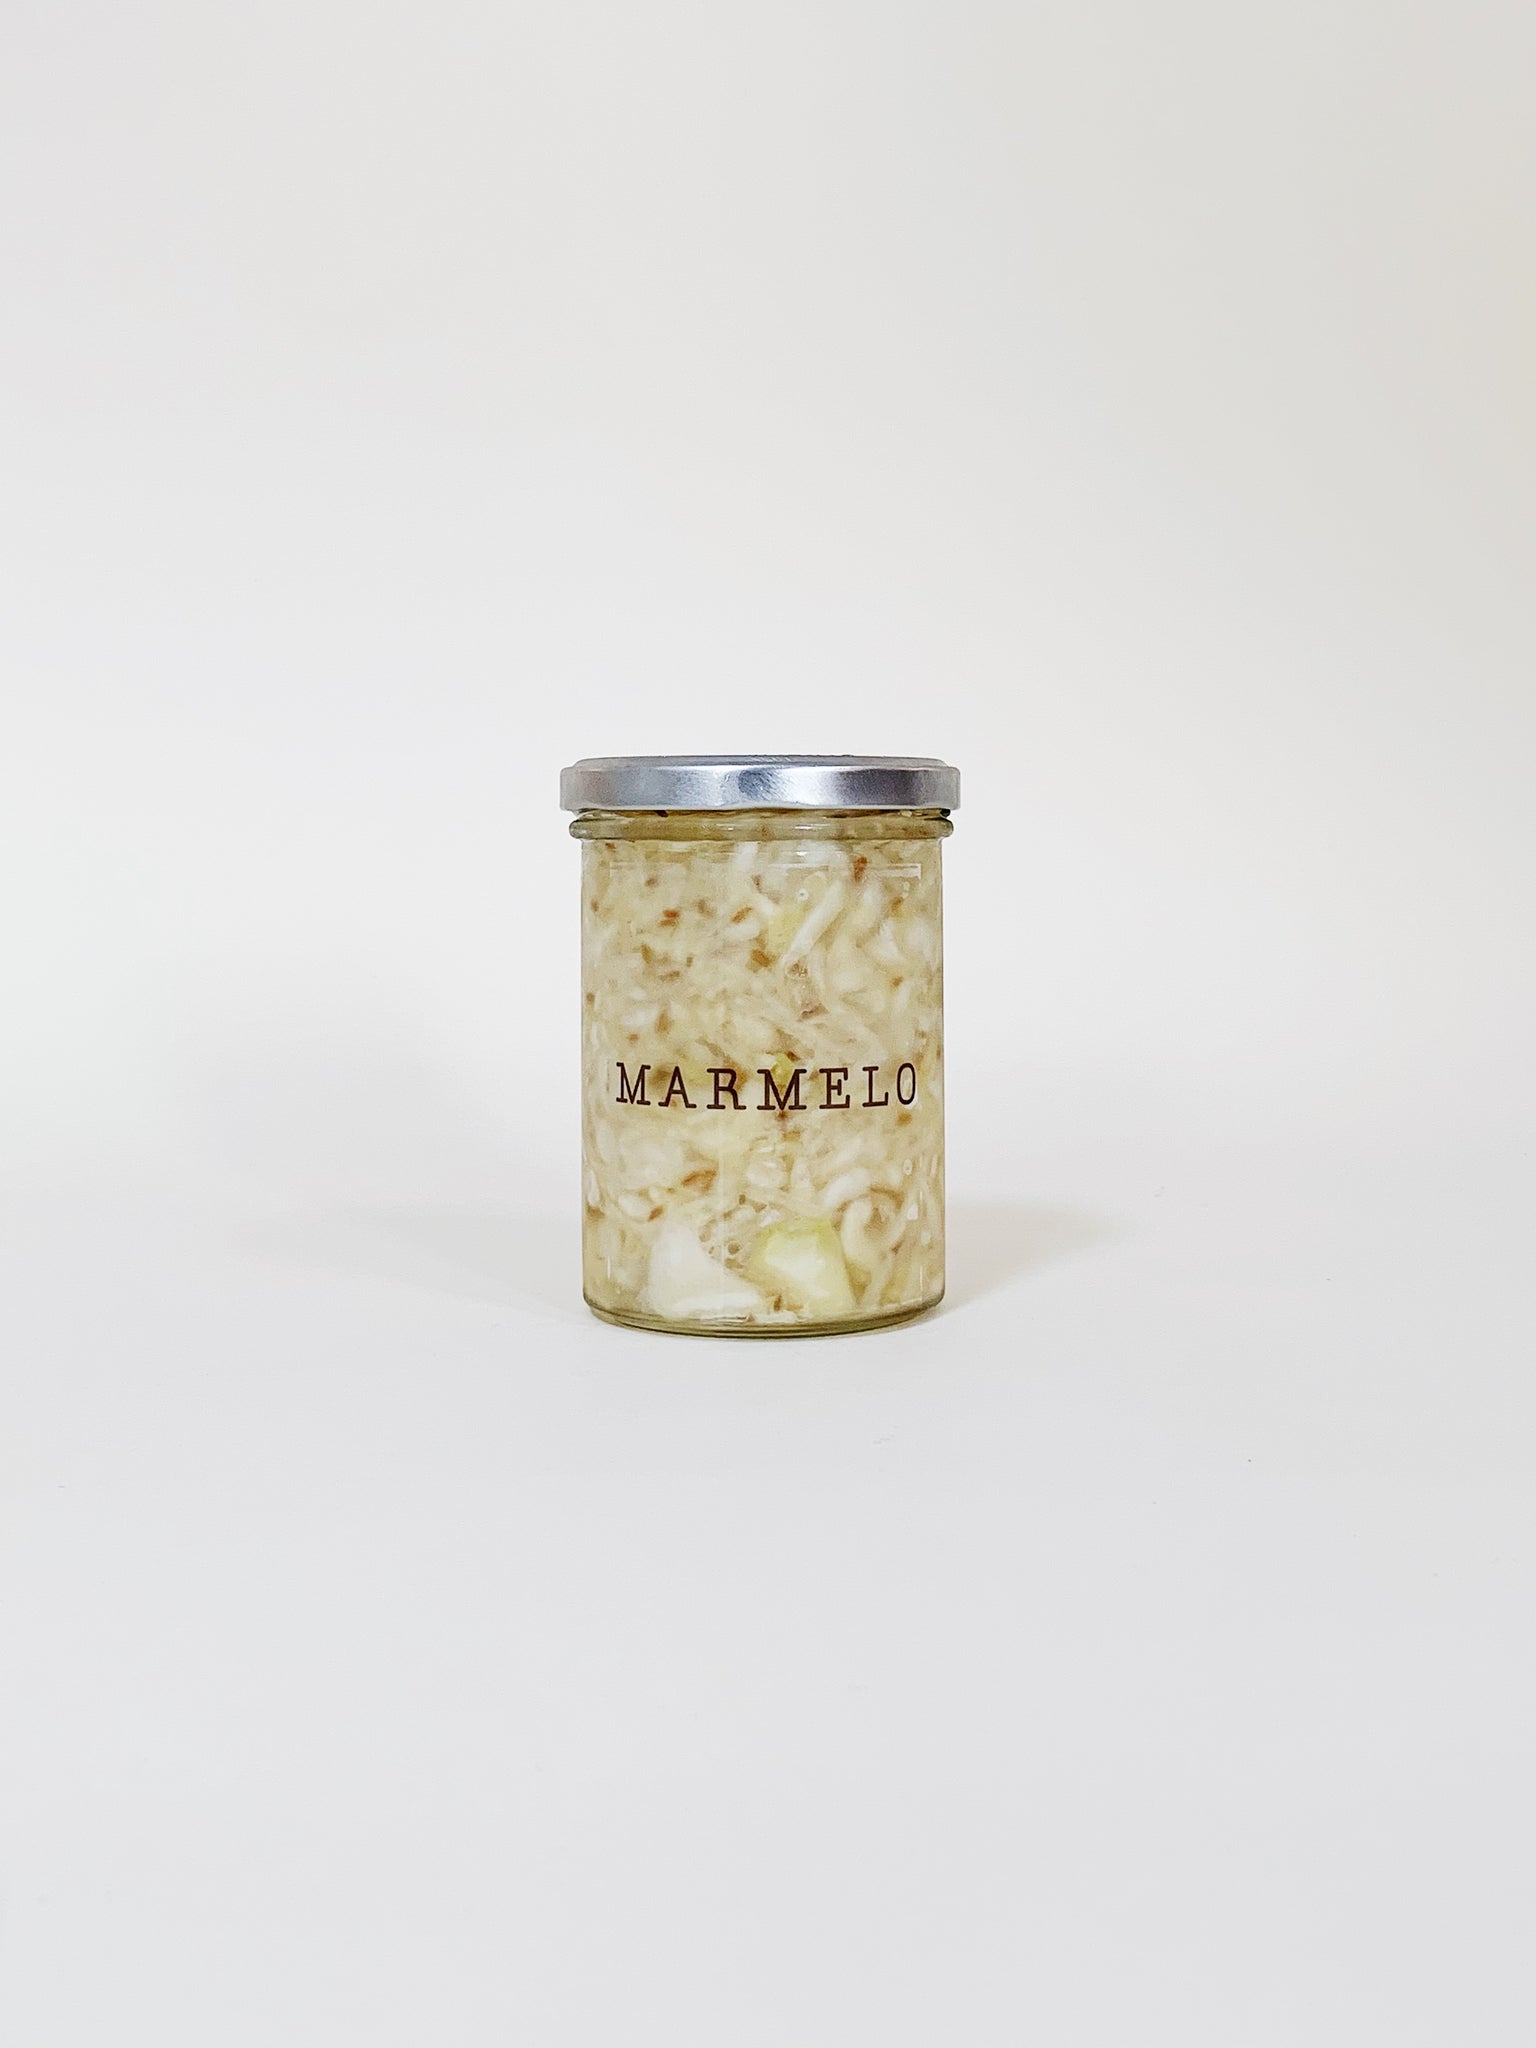 Marmelo - Fermented Sauerkraut